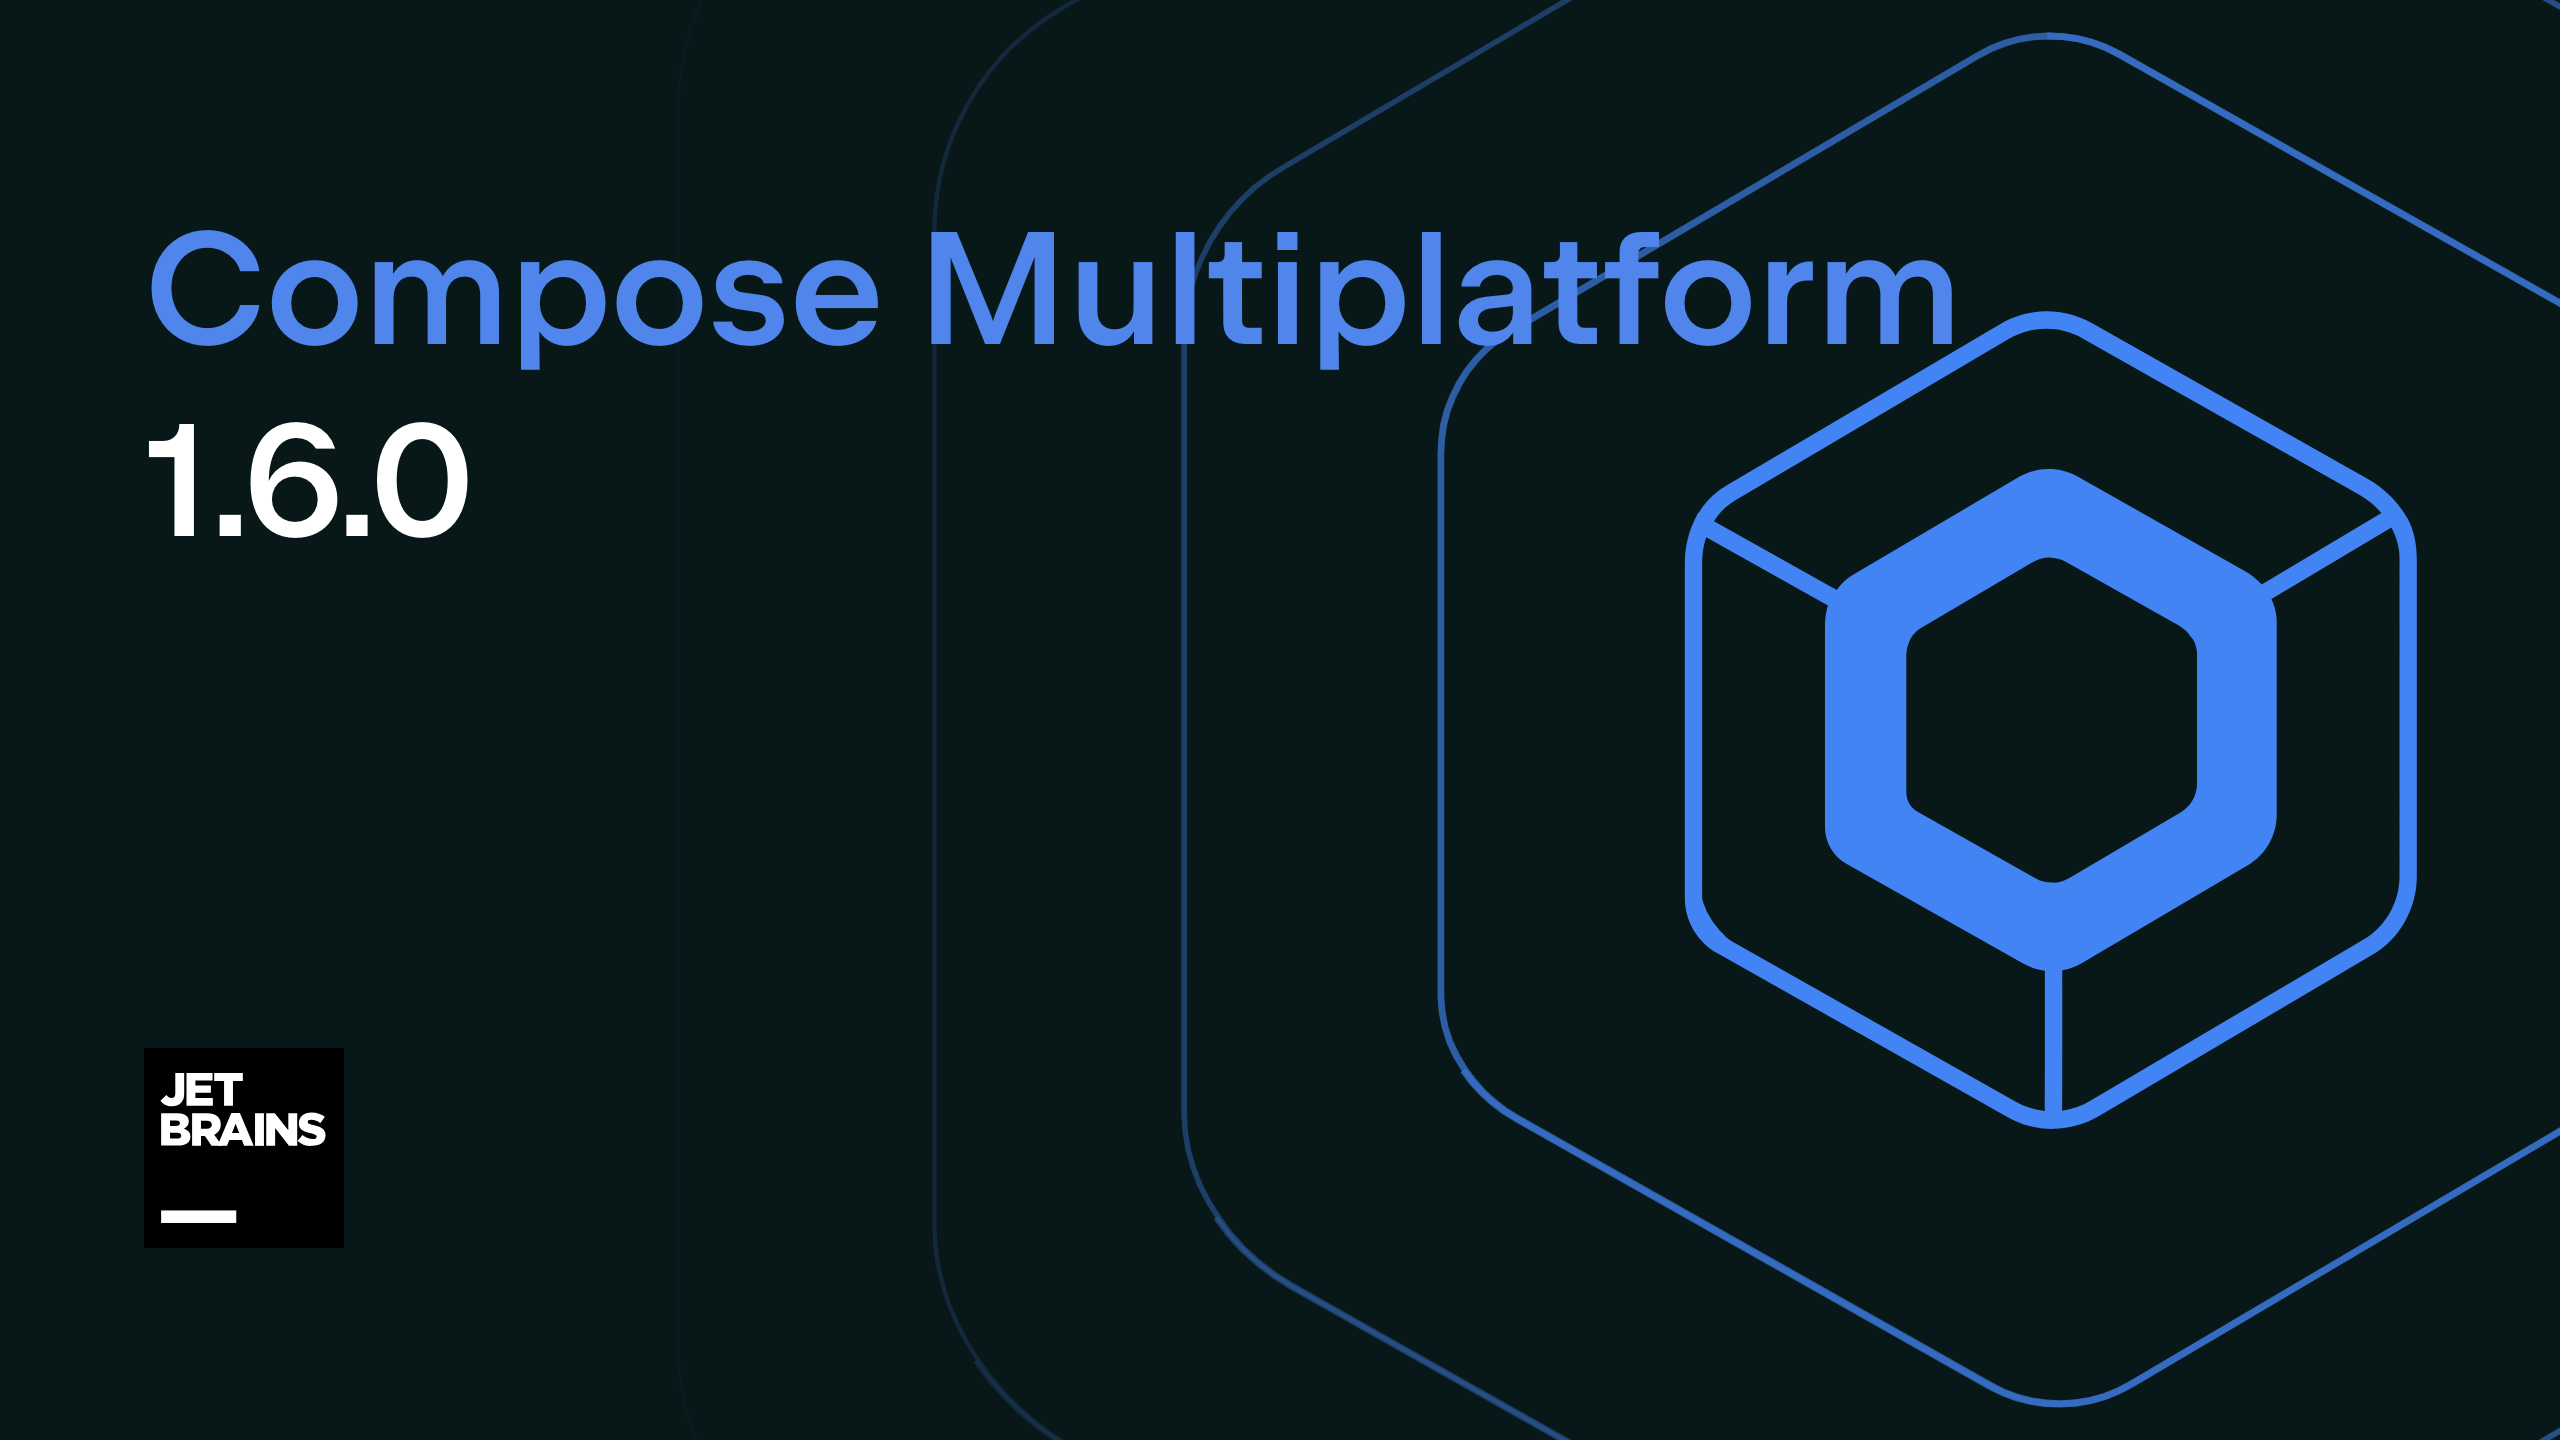 Compose Multiplatform 1.6.0 is out